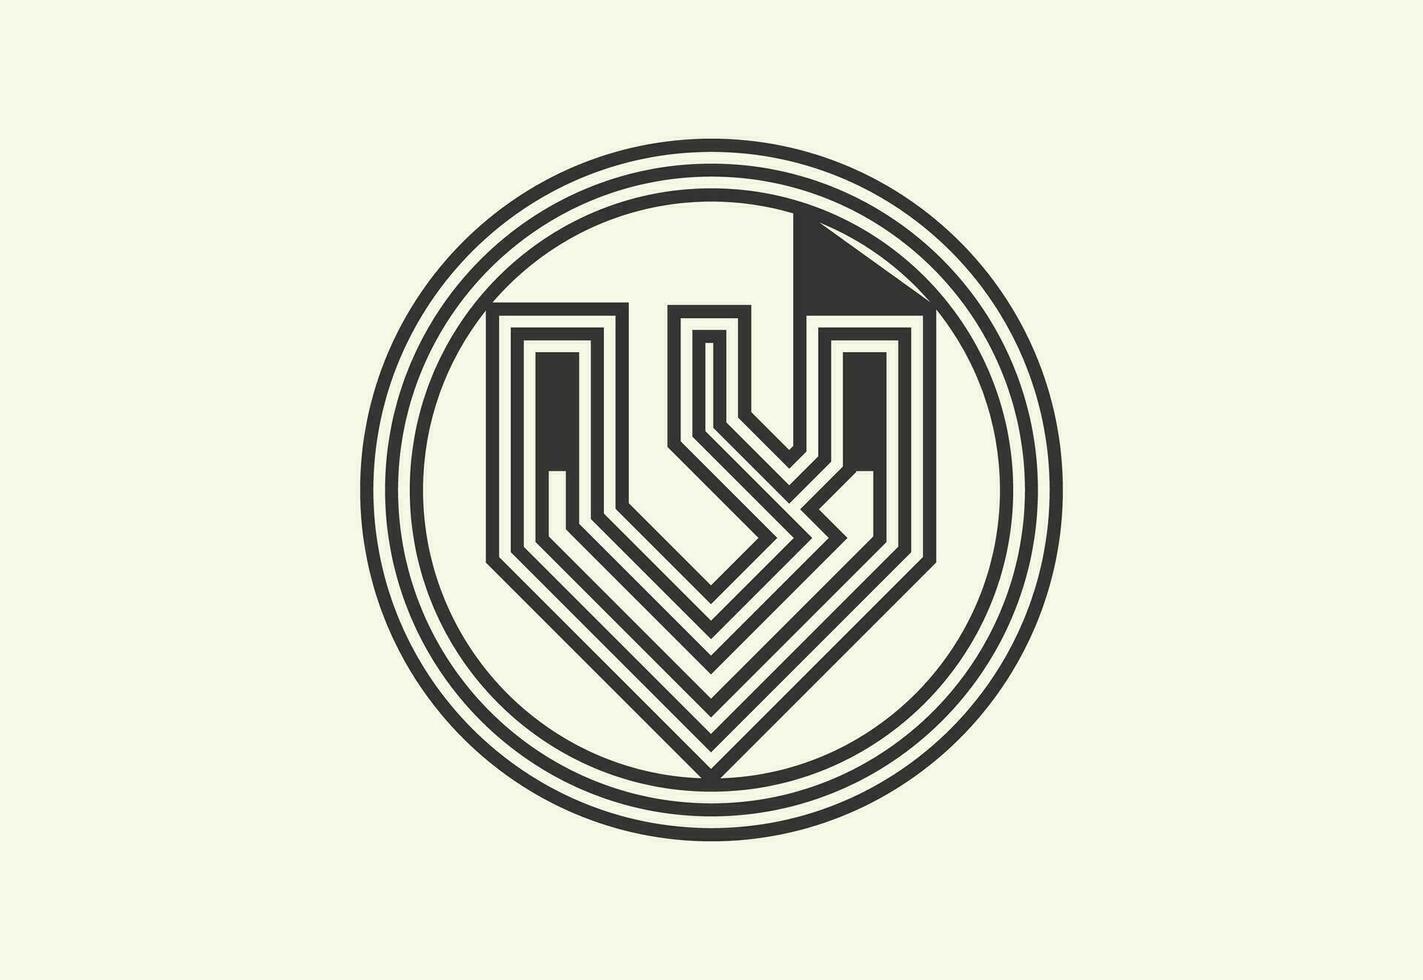 VV creative letter logo and icon design template vector